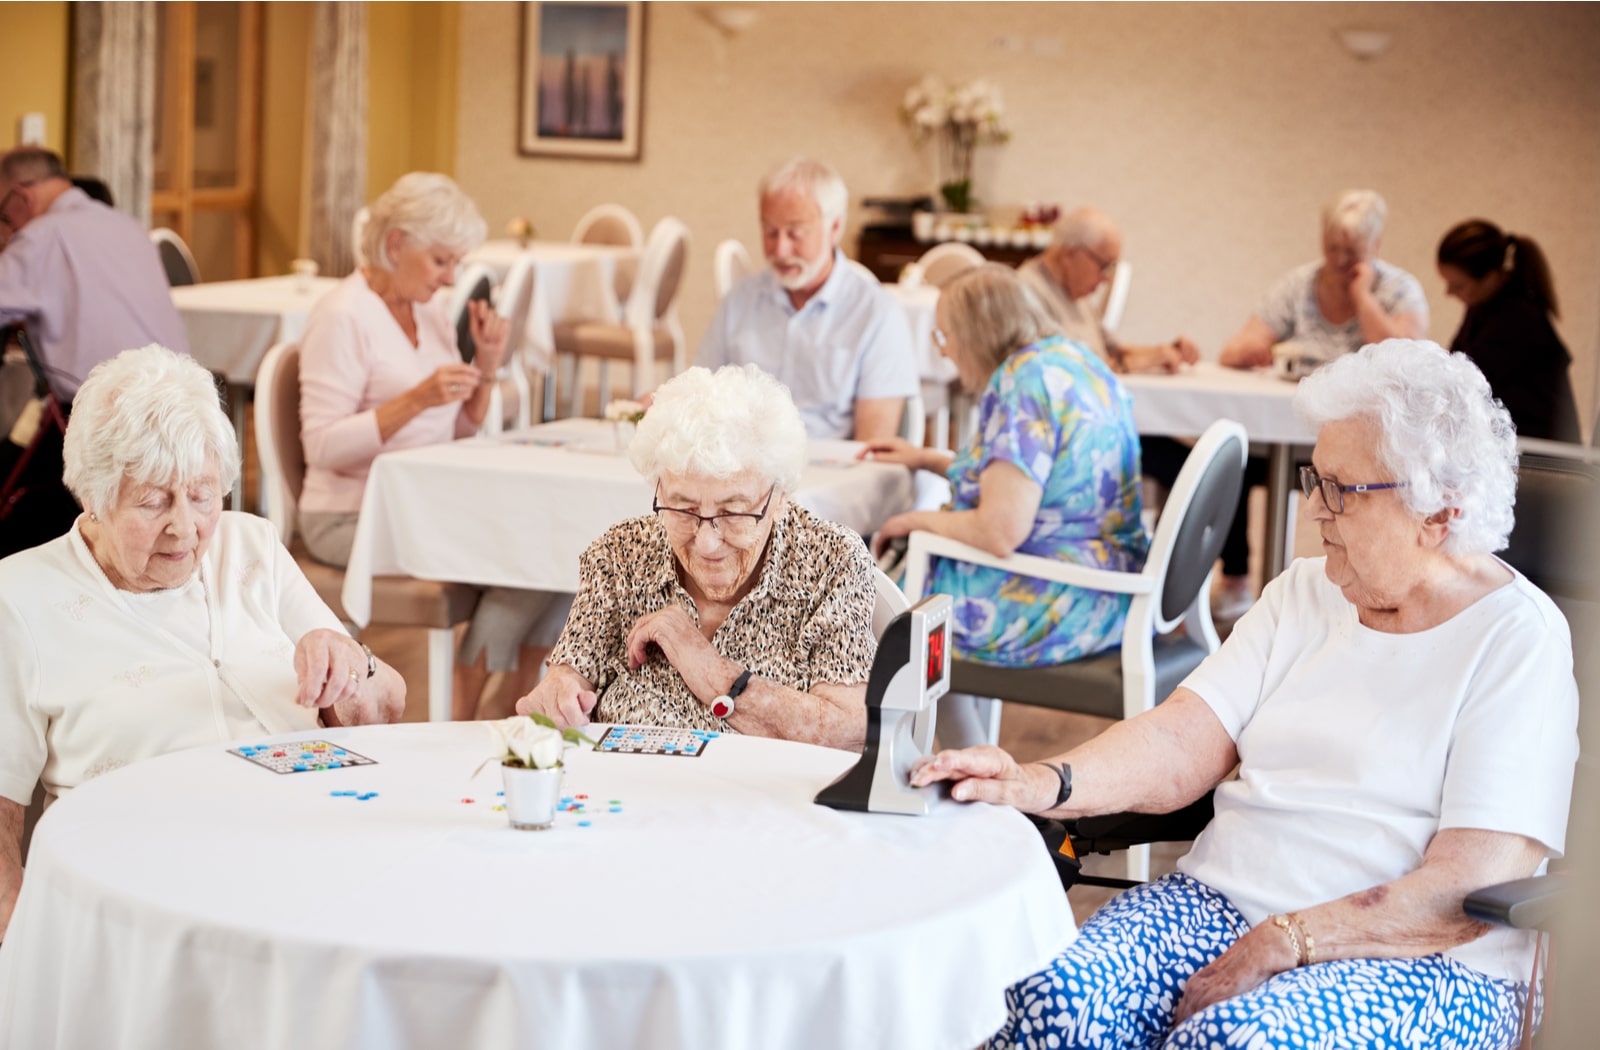 A group of senior citizen women playing bingo in a senior living community